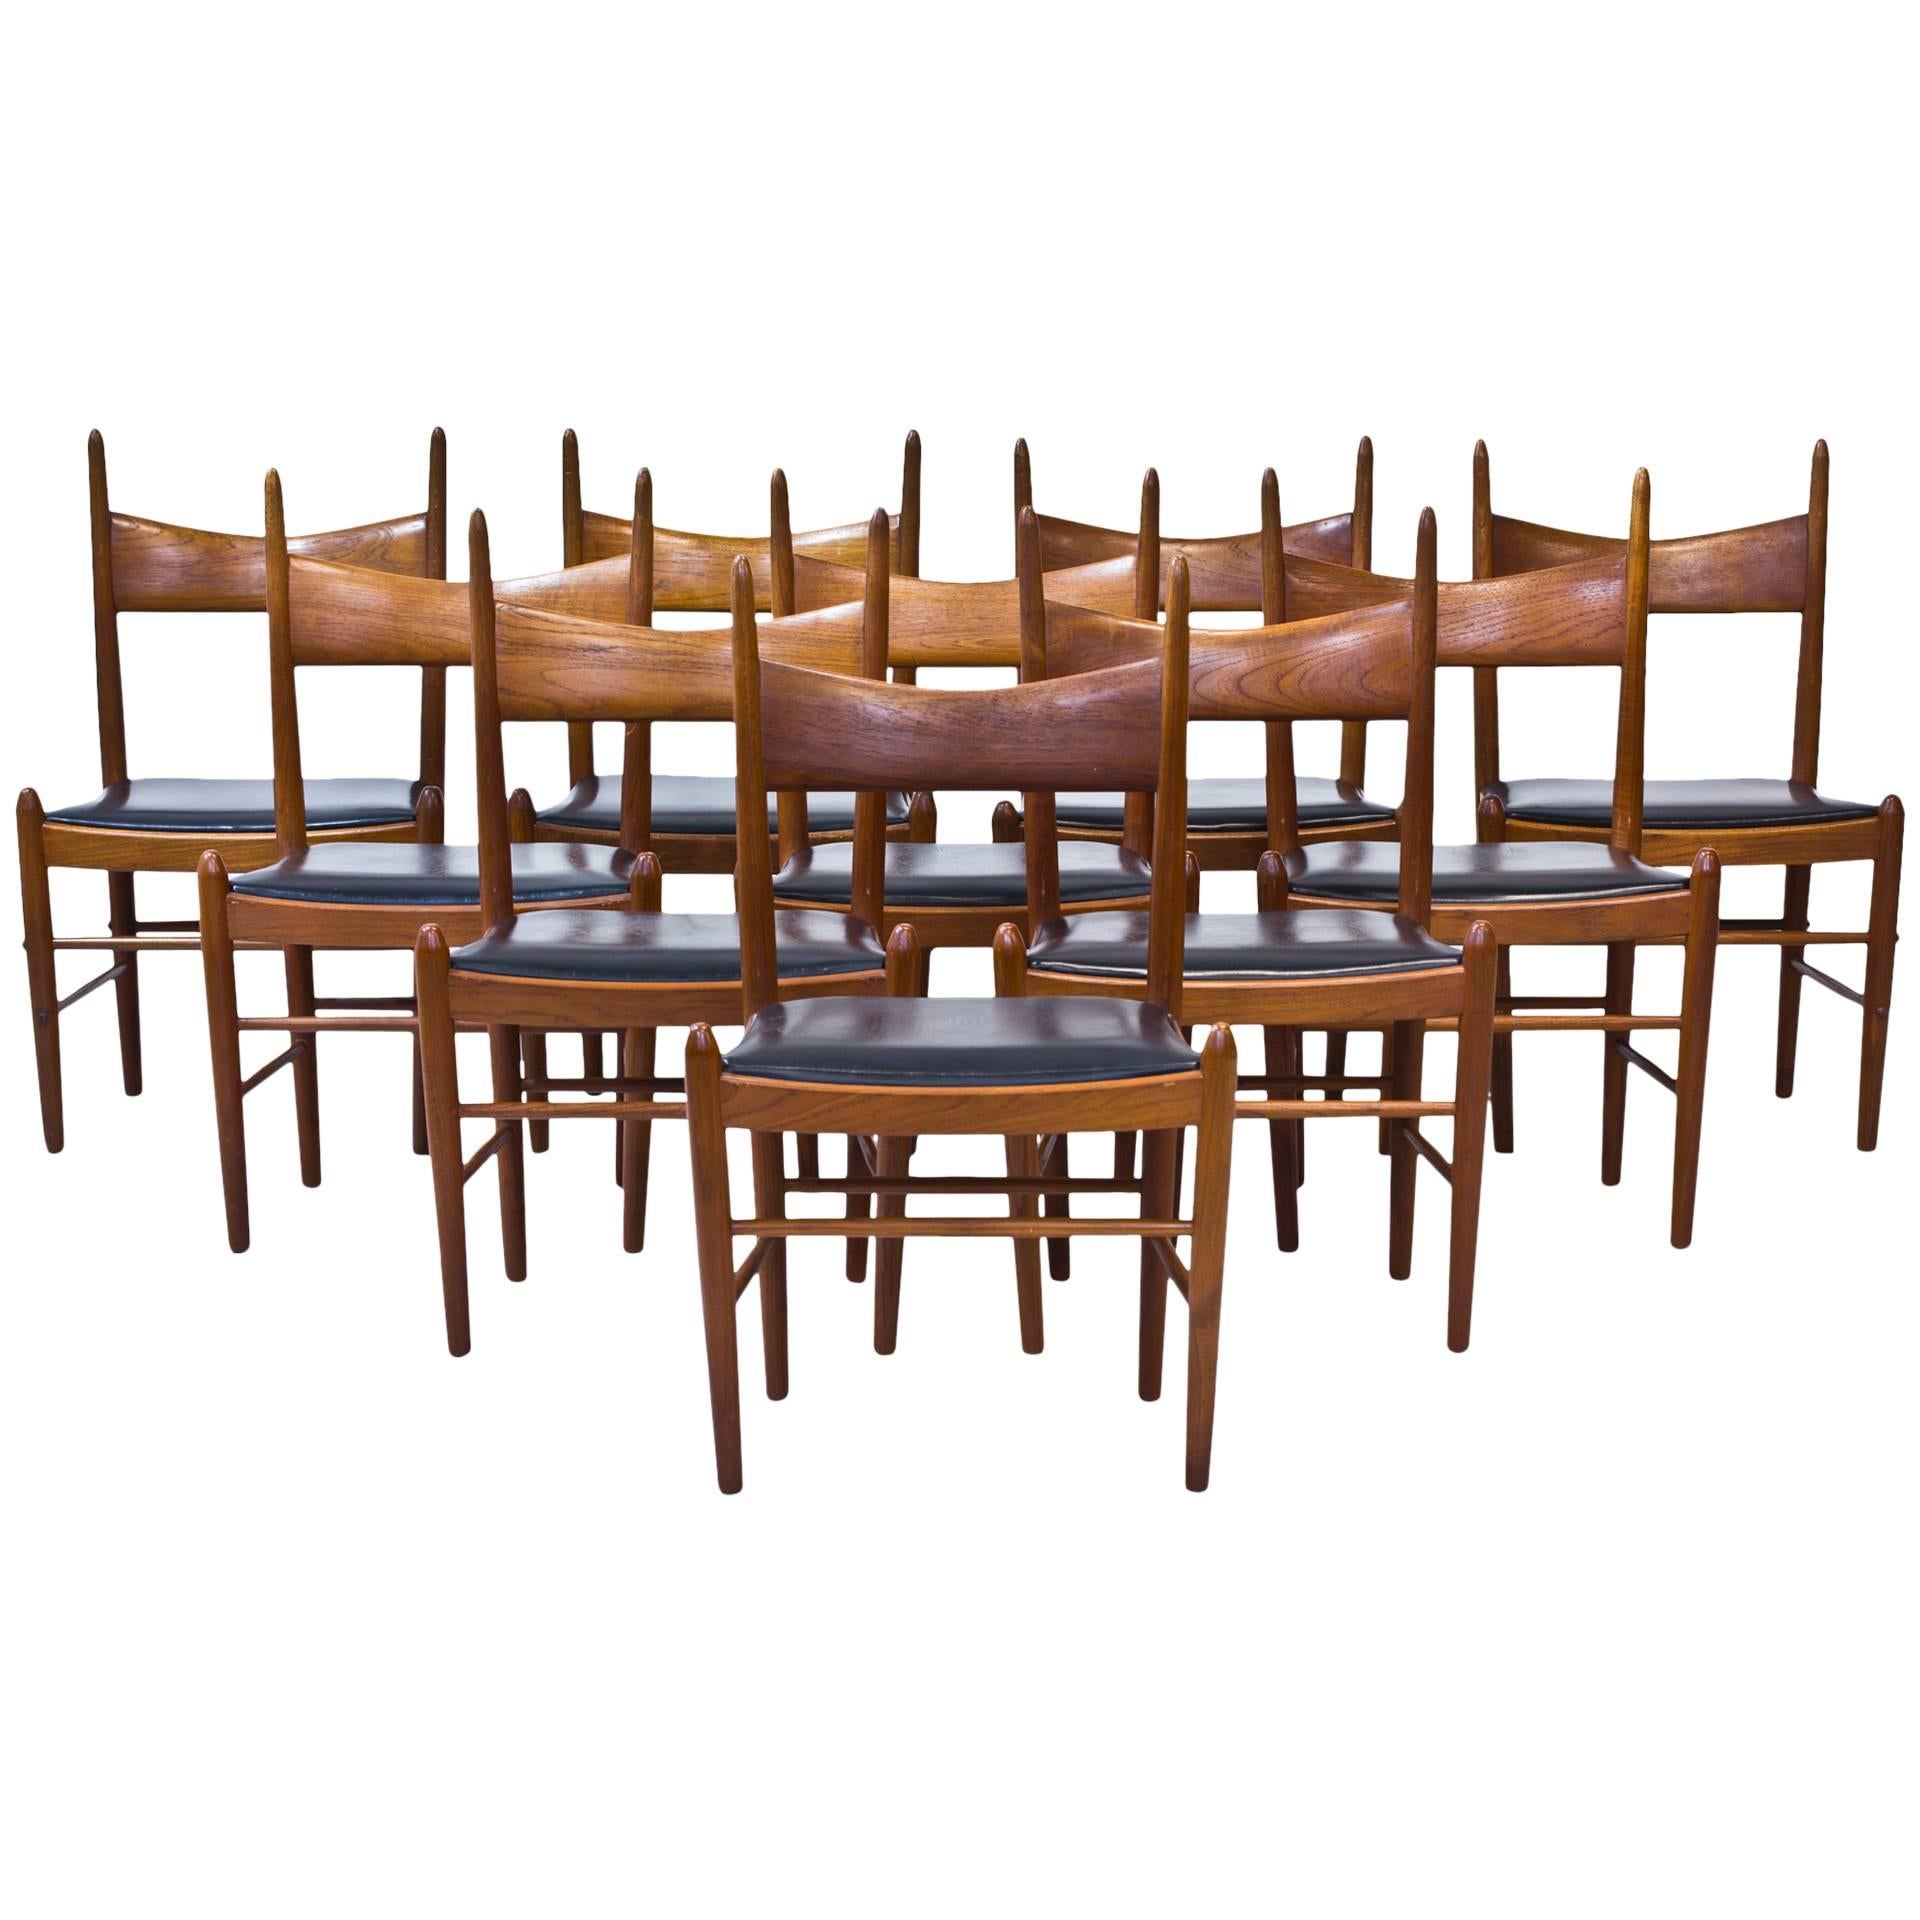 Set of Ten 1950s Teak Dining Chairs by Illum Wikkels�ø